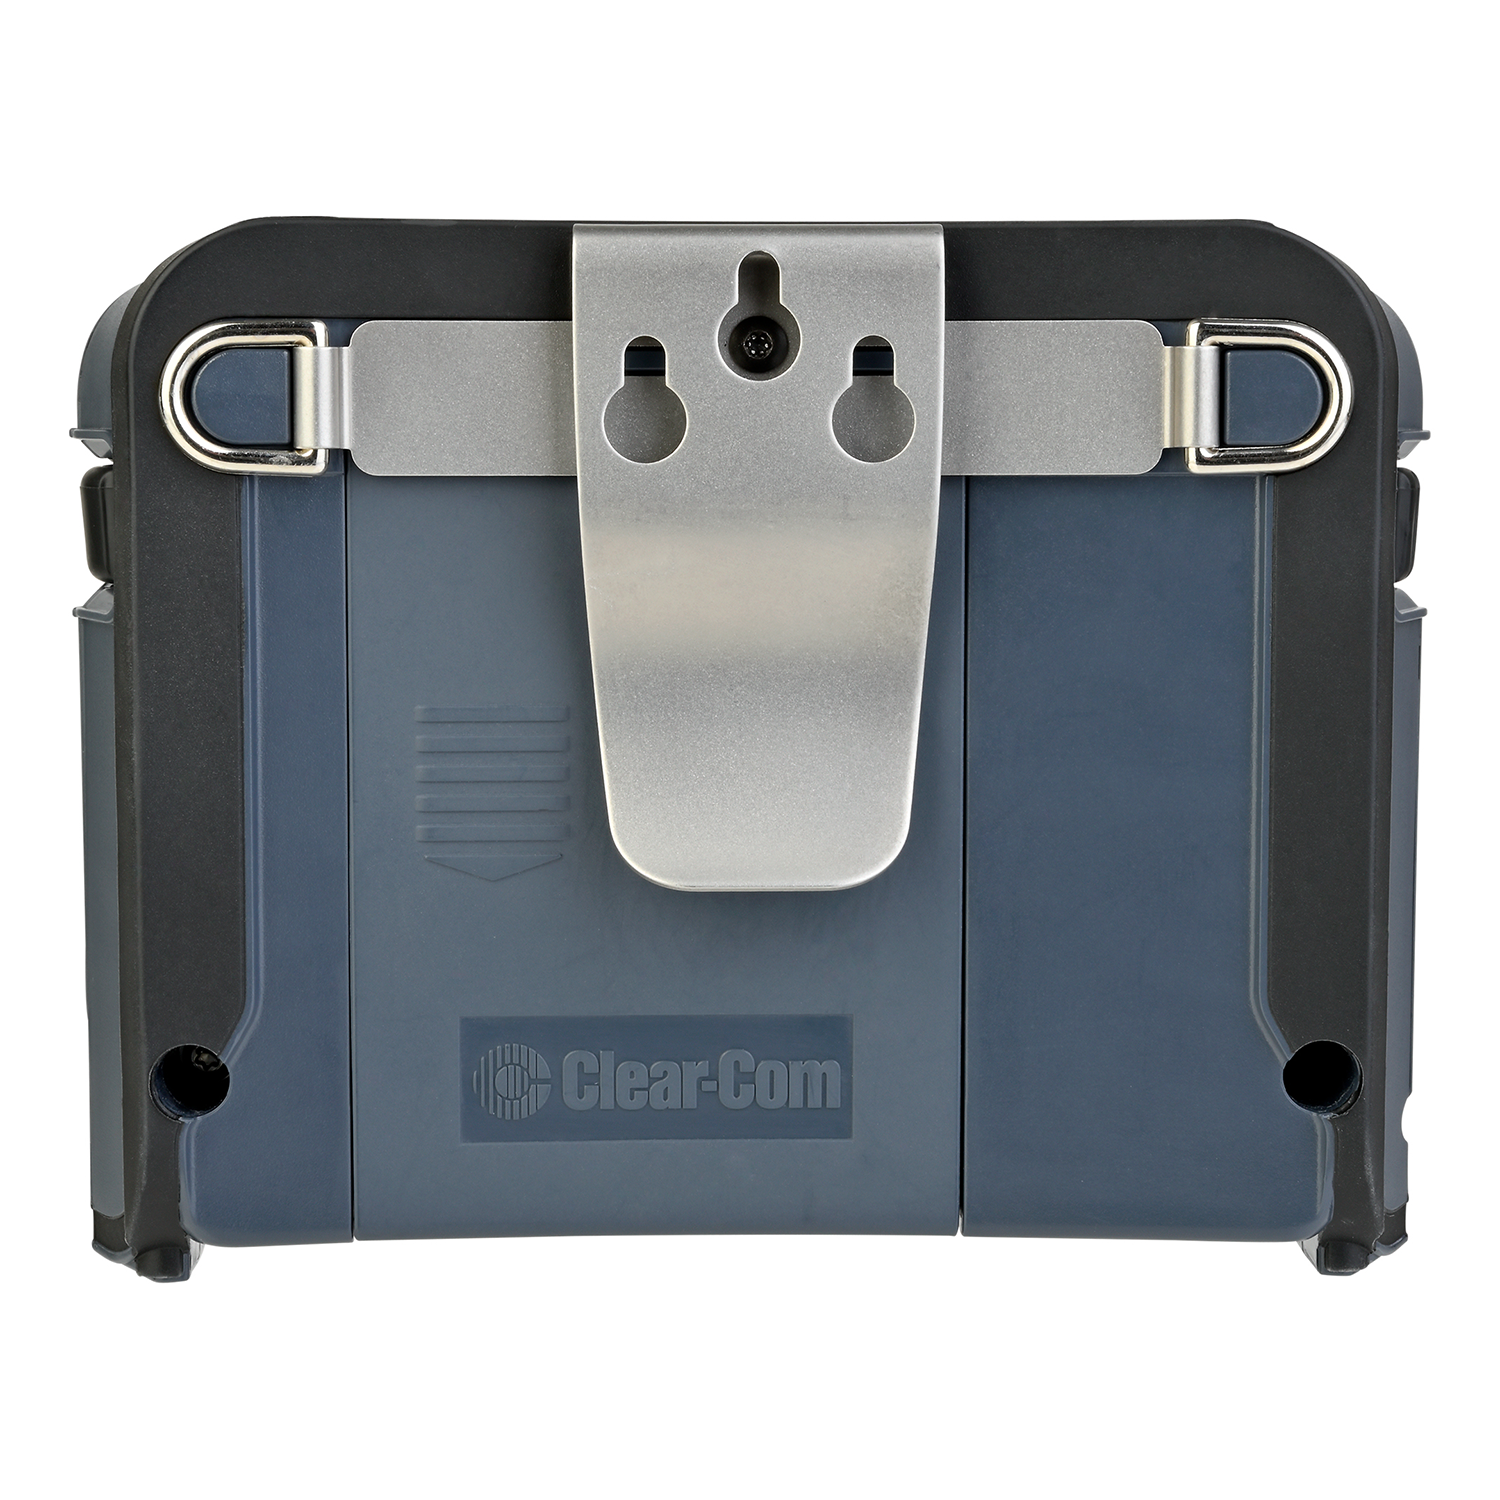 Clear-Com FSE-BP50 FreeSpeak Edge 5GHz Wireless Beltpack